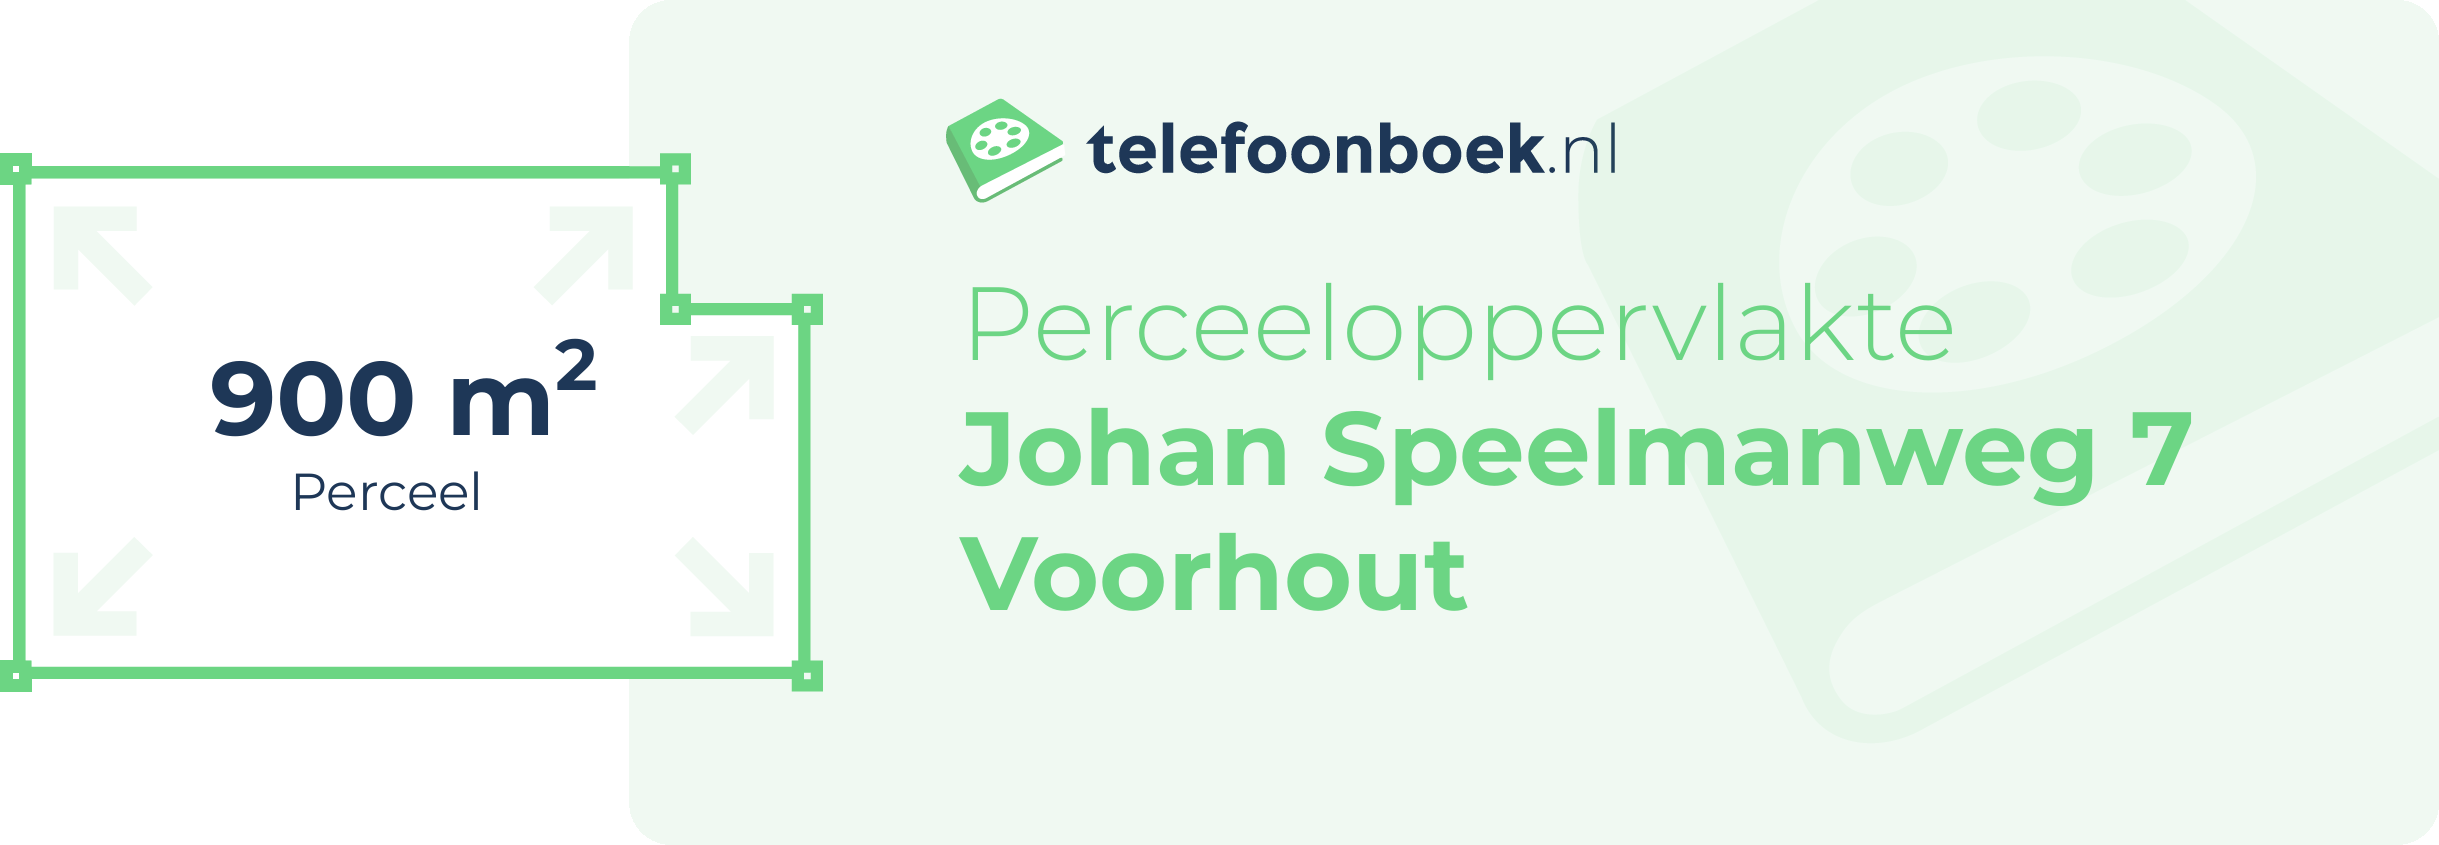 Perceeloppervlakte Johan Speelmanweg 7 Voorhout